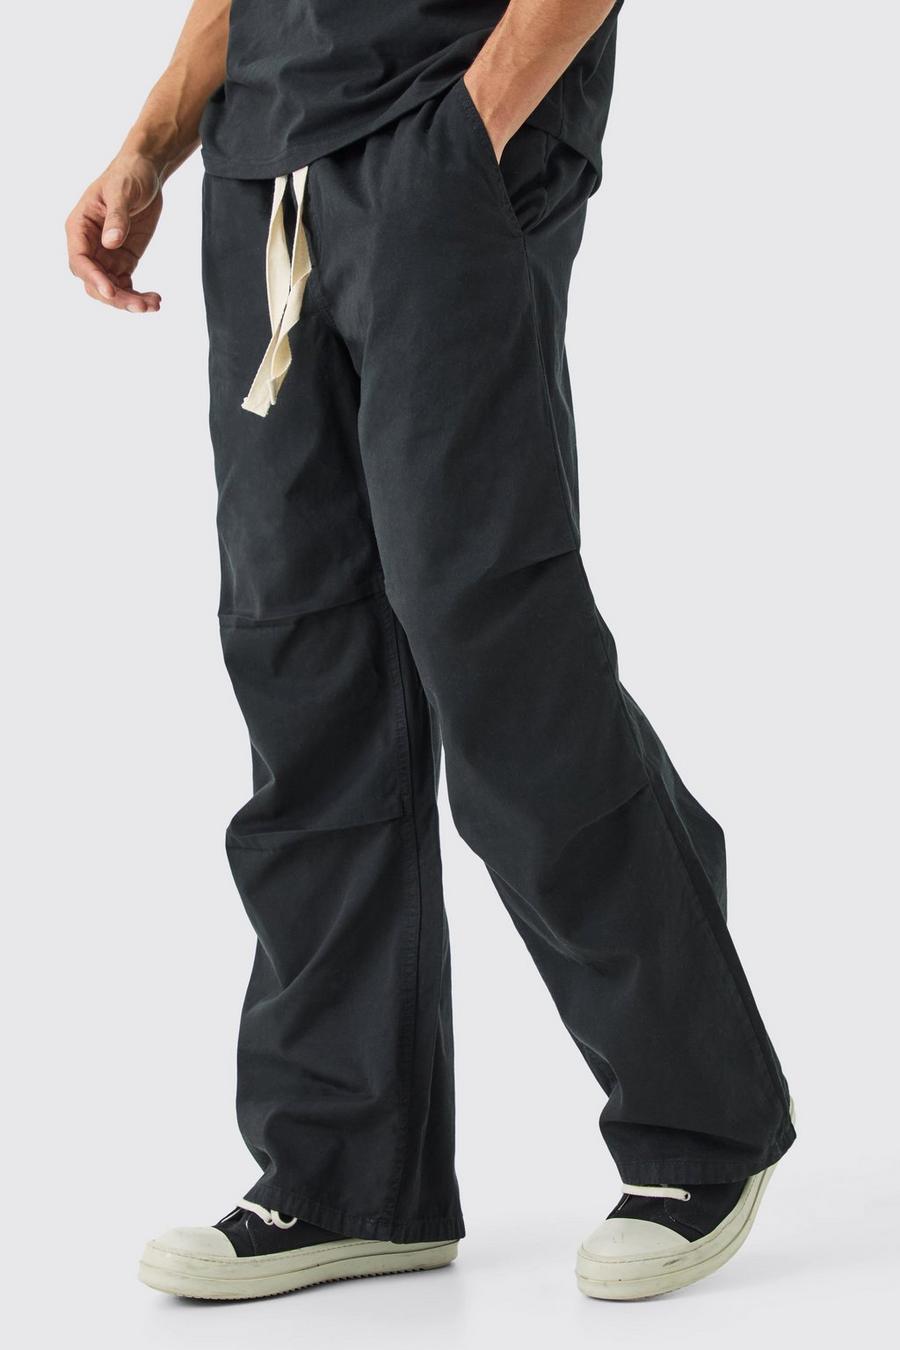 Black Elastic Waist Contrast Drawcord Extreme Baggy Pants